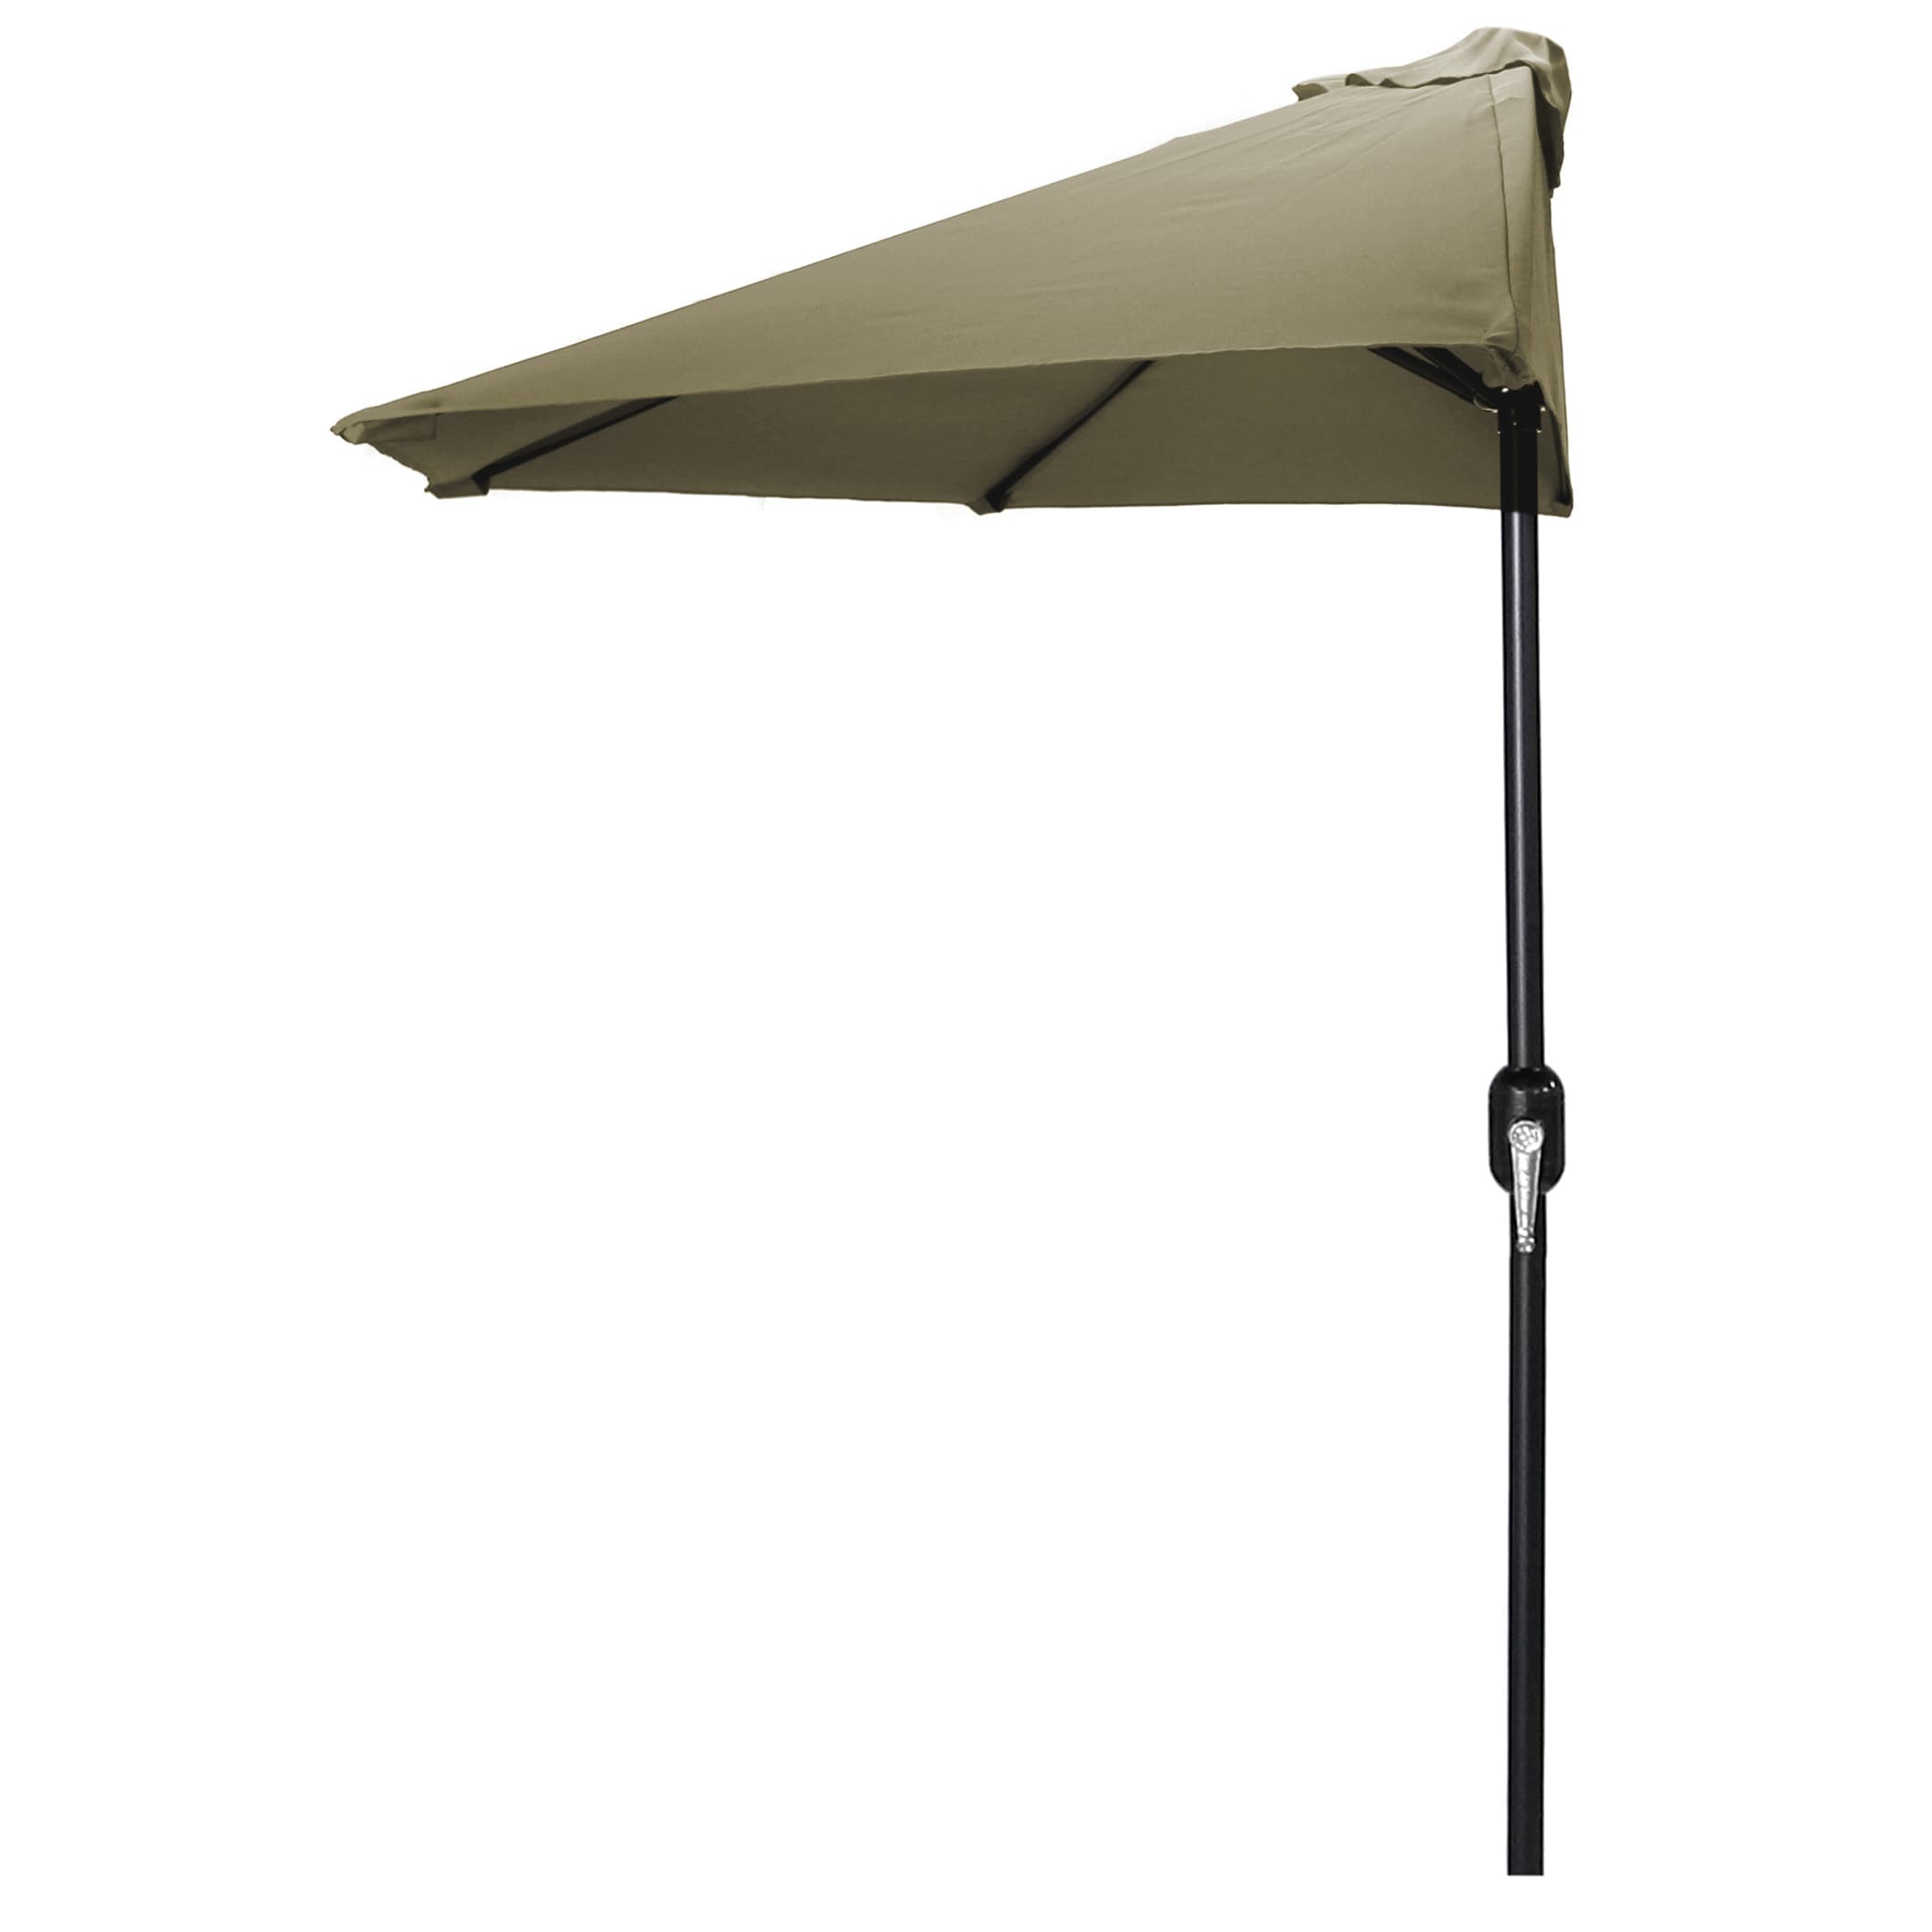 Jordan Manufacturing 9-foot Half Umbrella